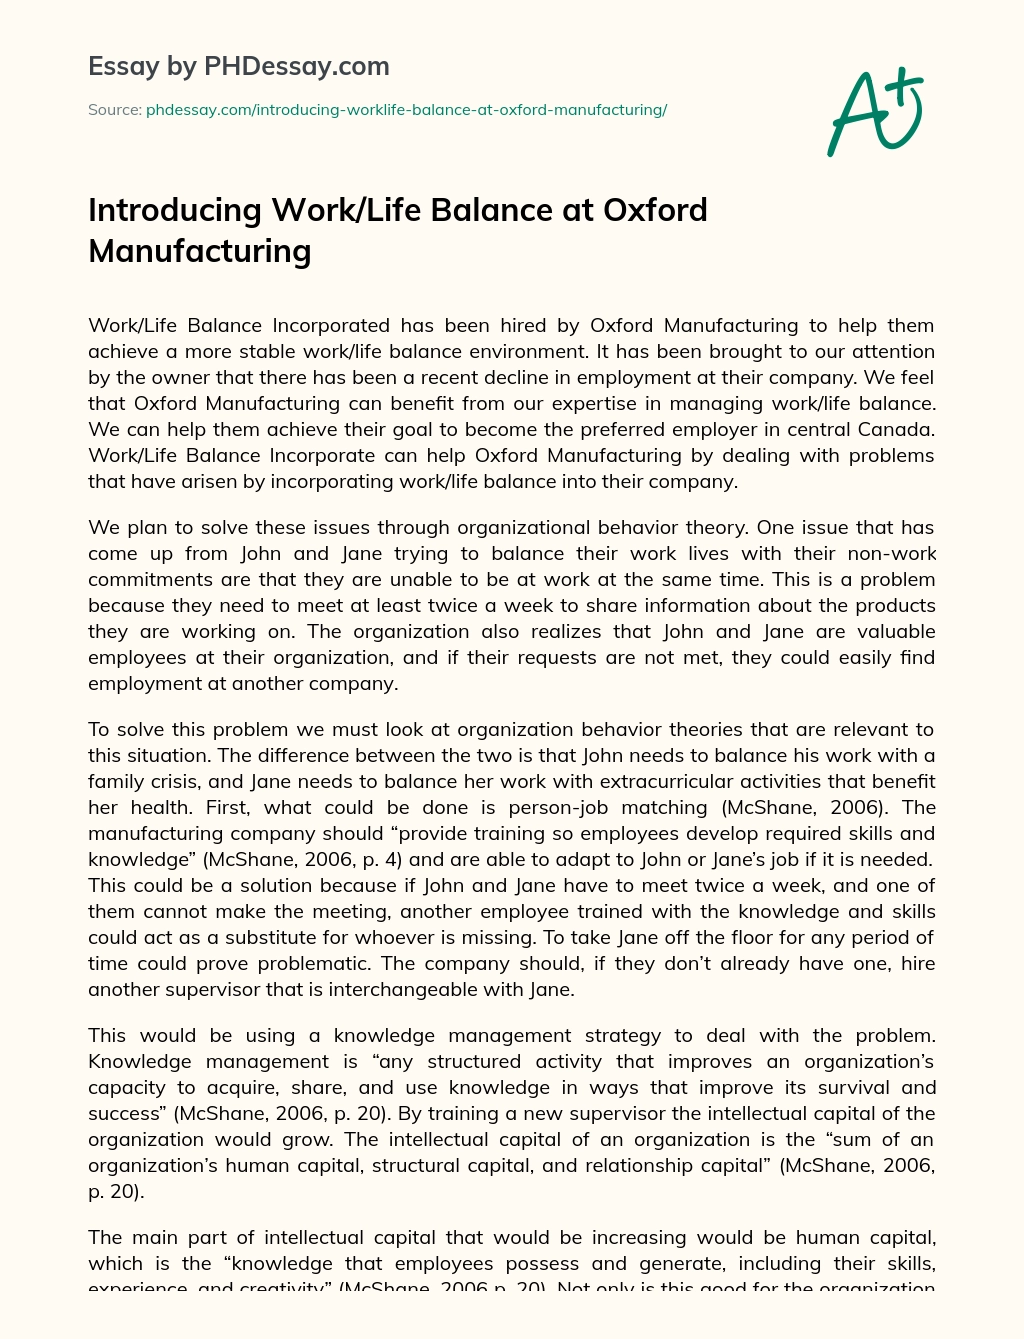 Introducing Work/Life Balance at Oxford Manufacturing essay